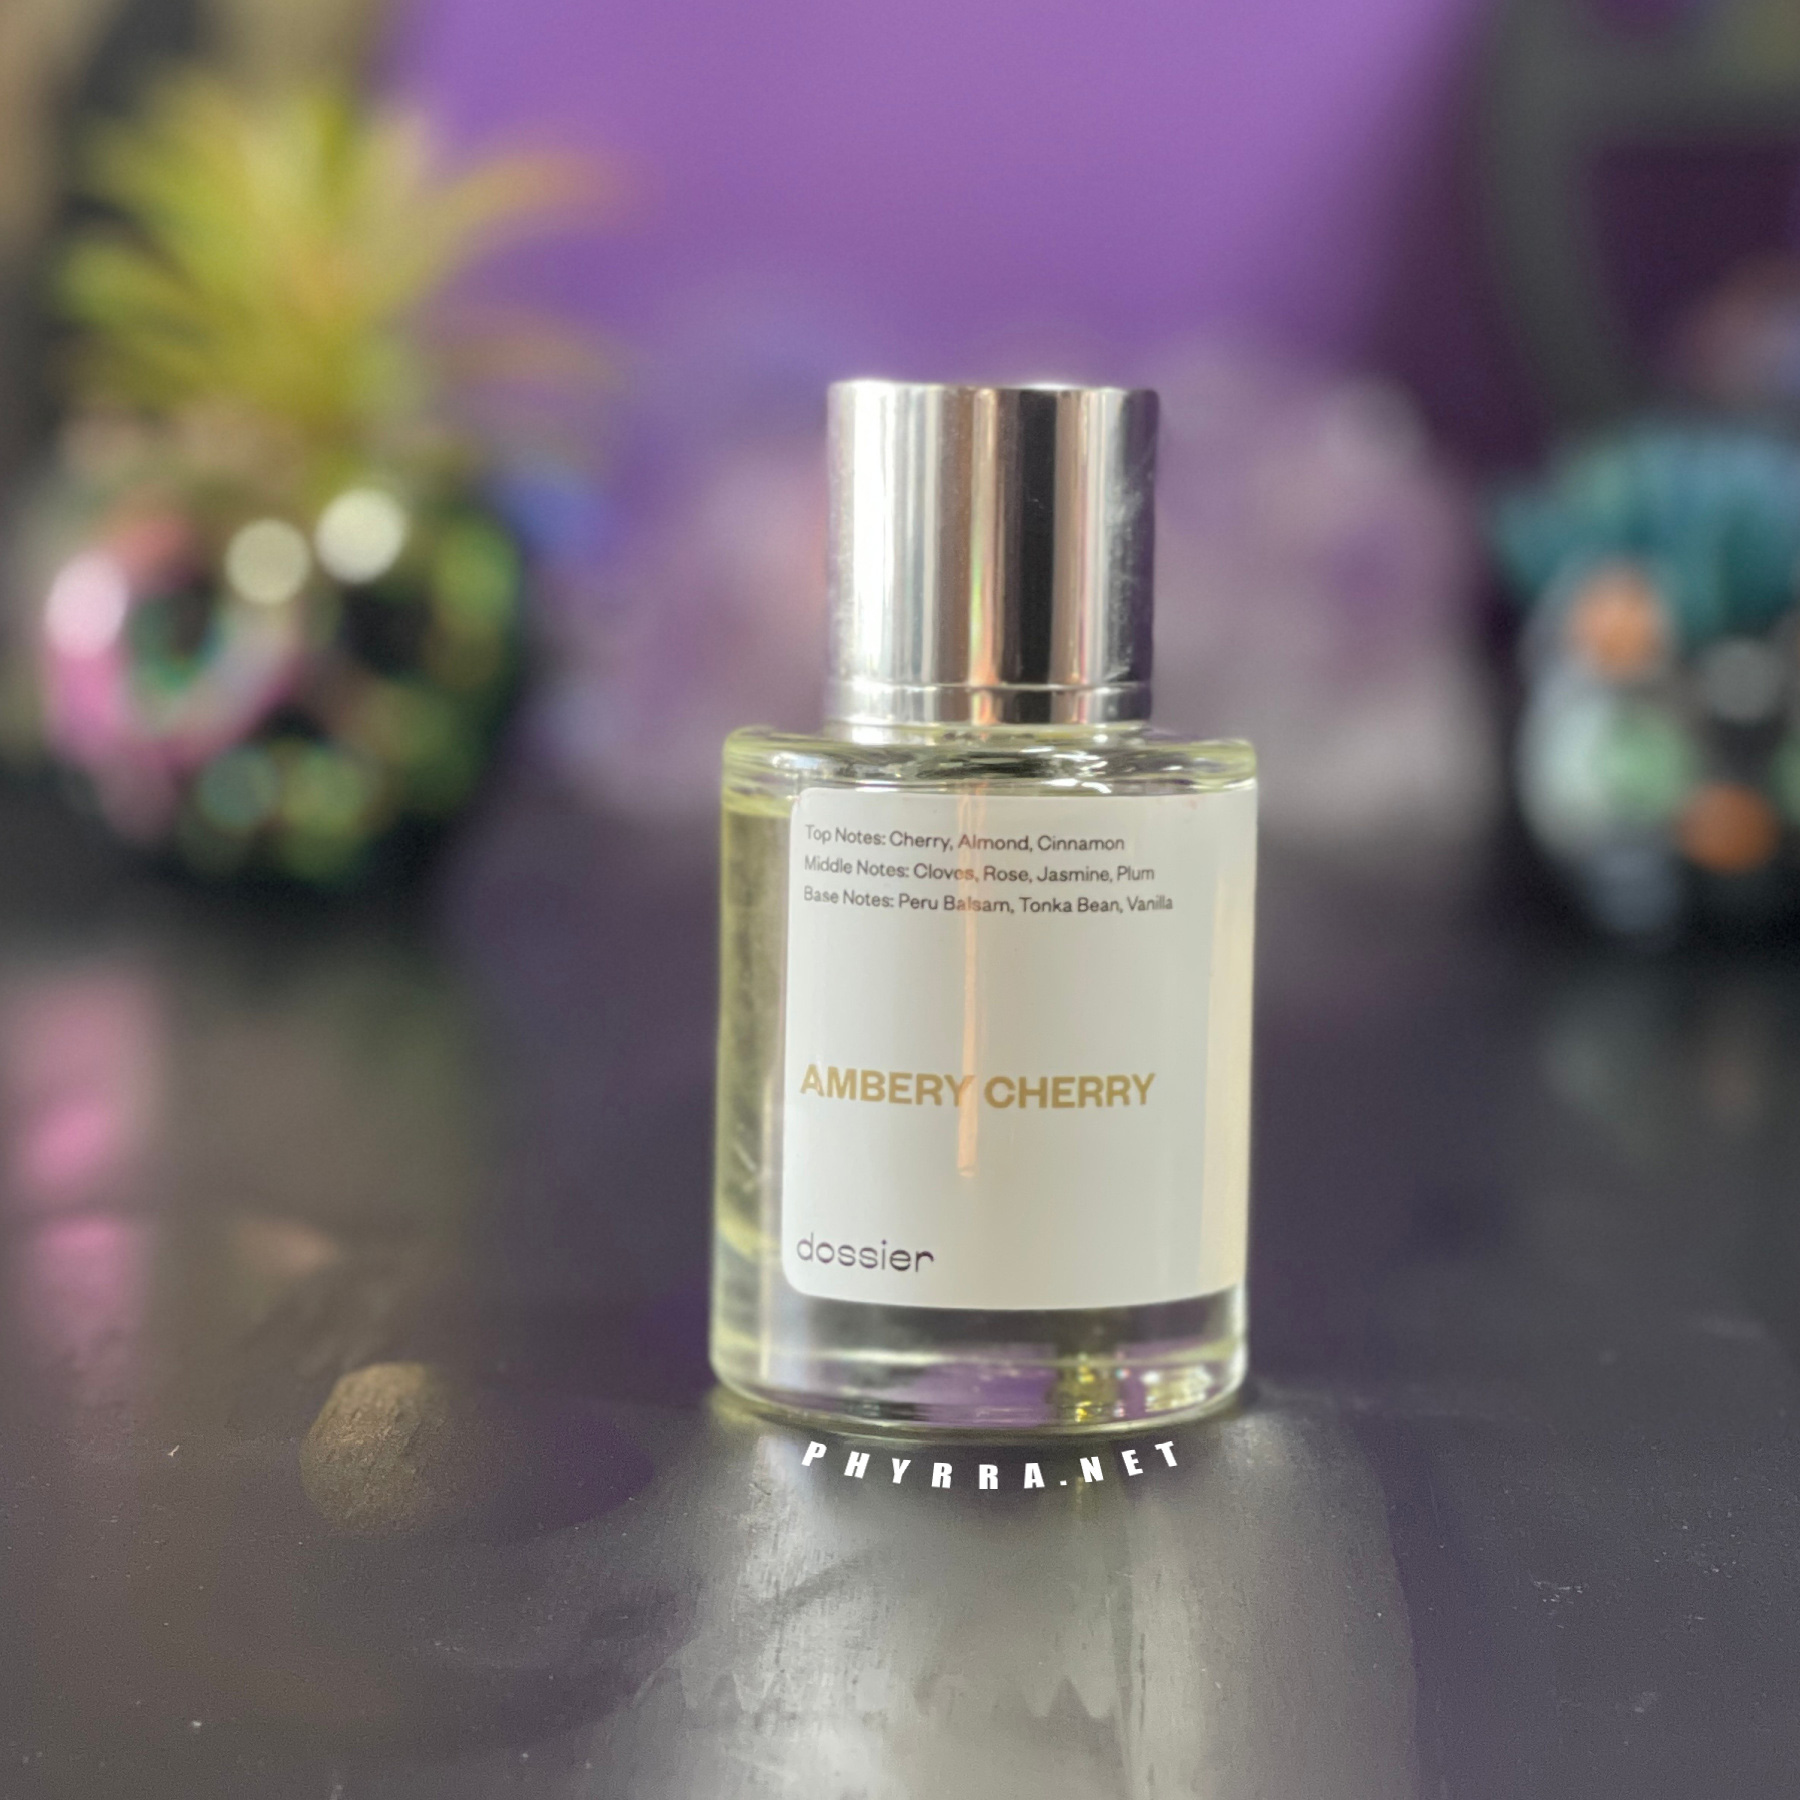 Premium Fragrances for Everyone! A Dossier Perfume Review